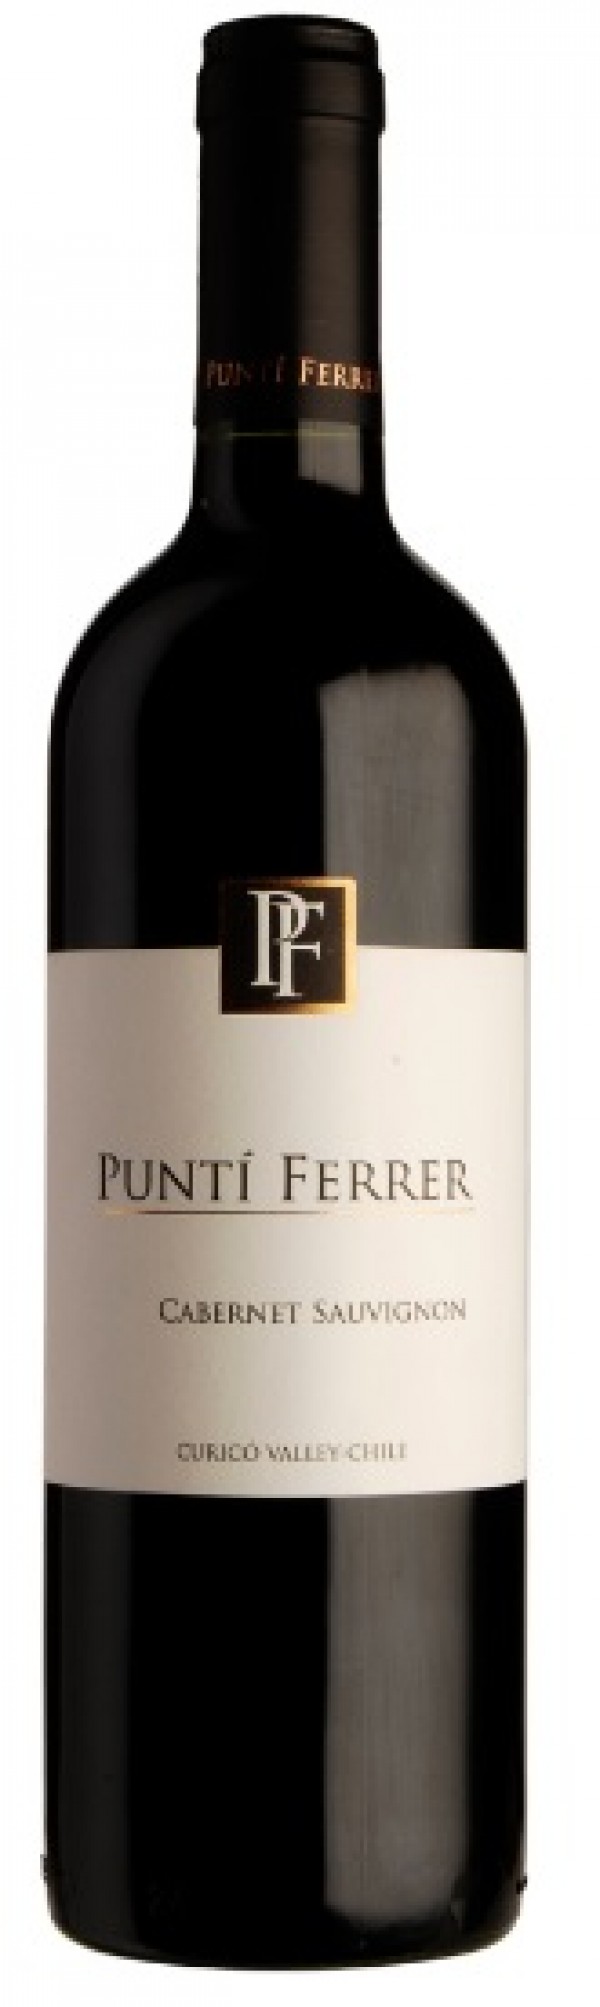 Vinho chileno Puntí Ferrer cabernet sauvignon 750 ml